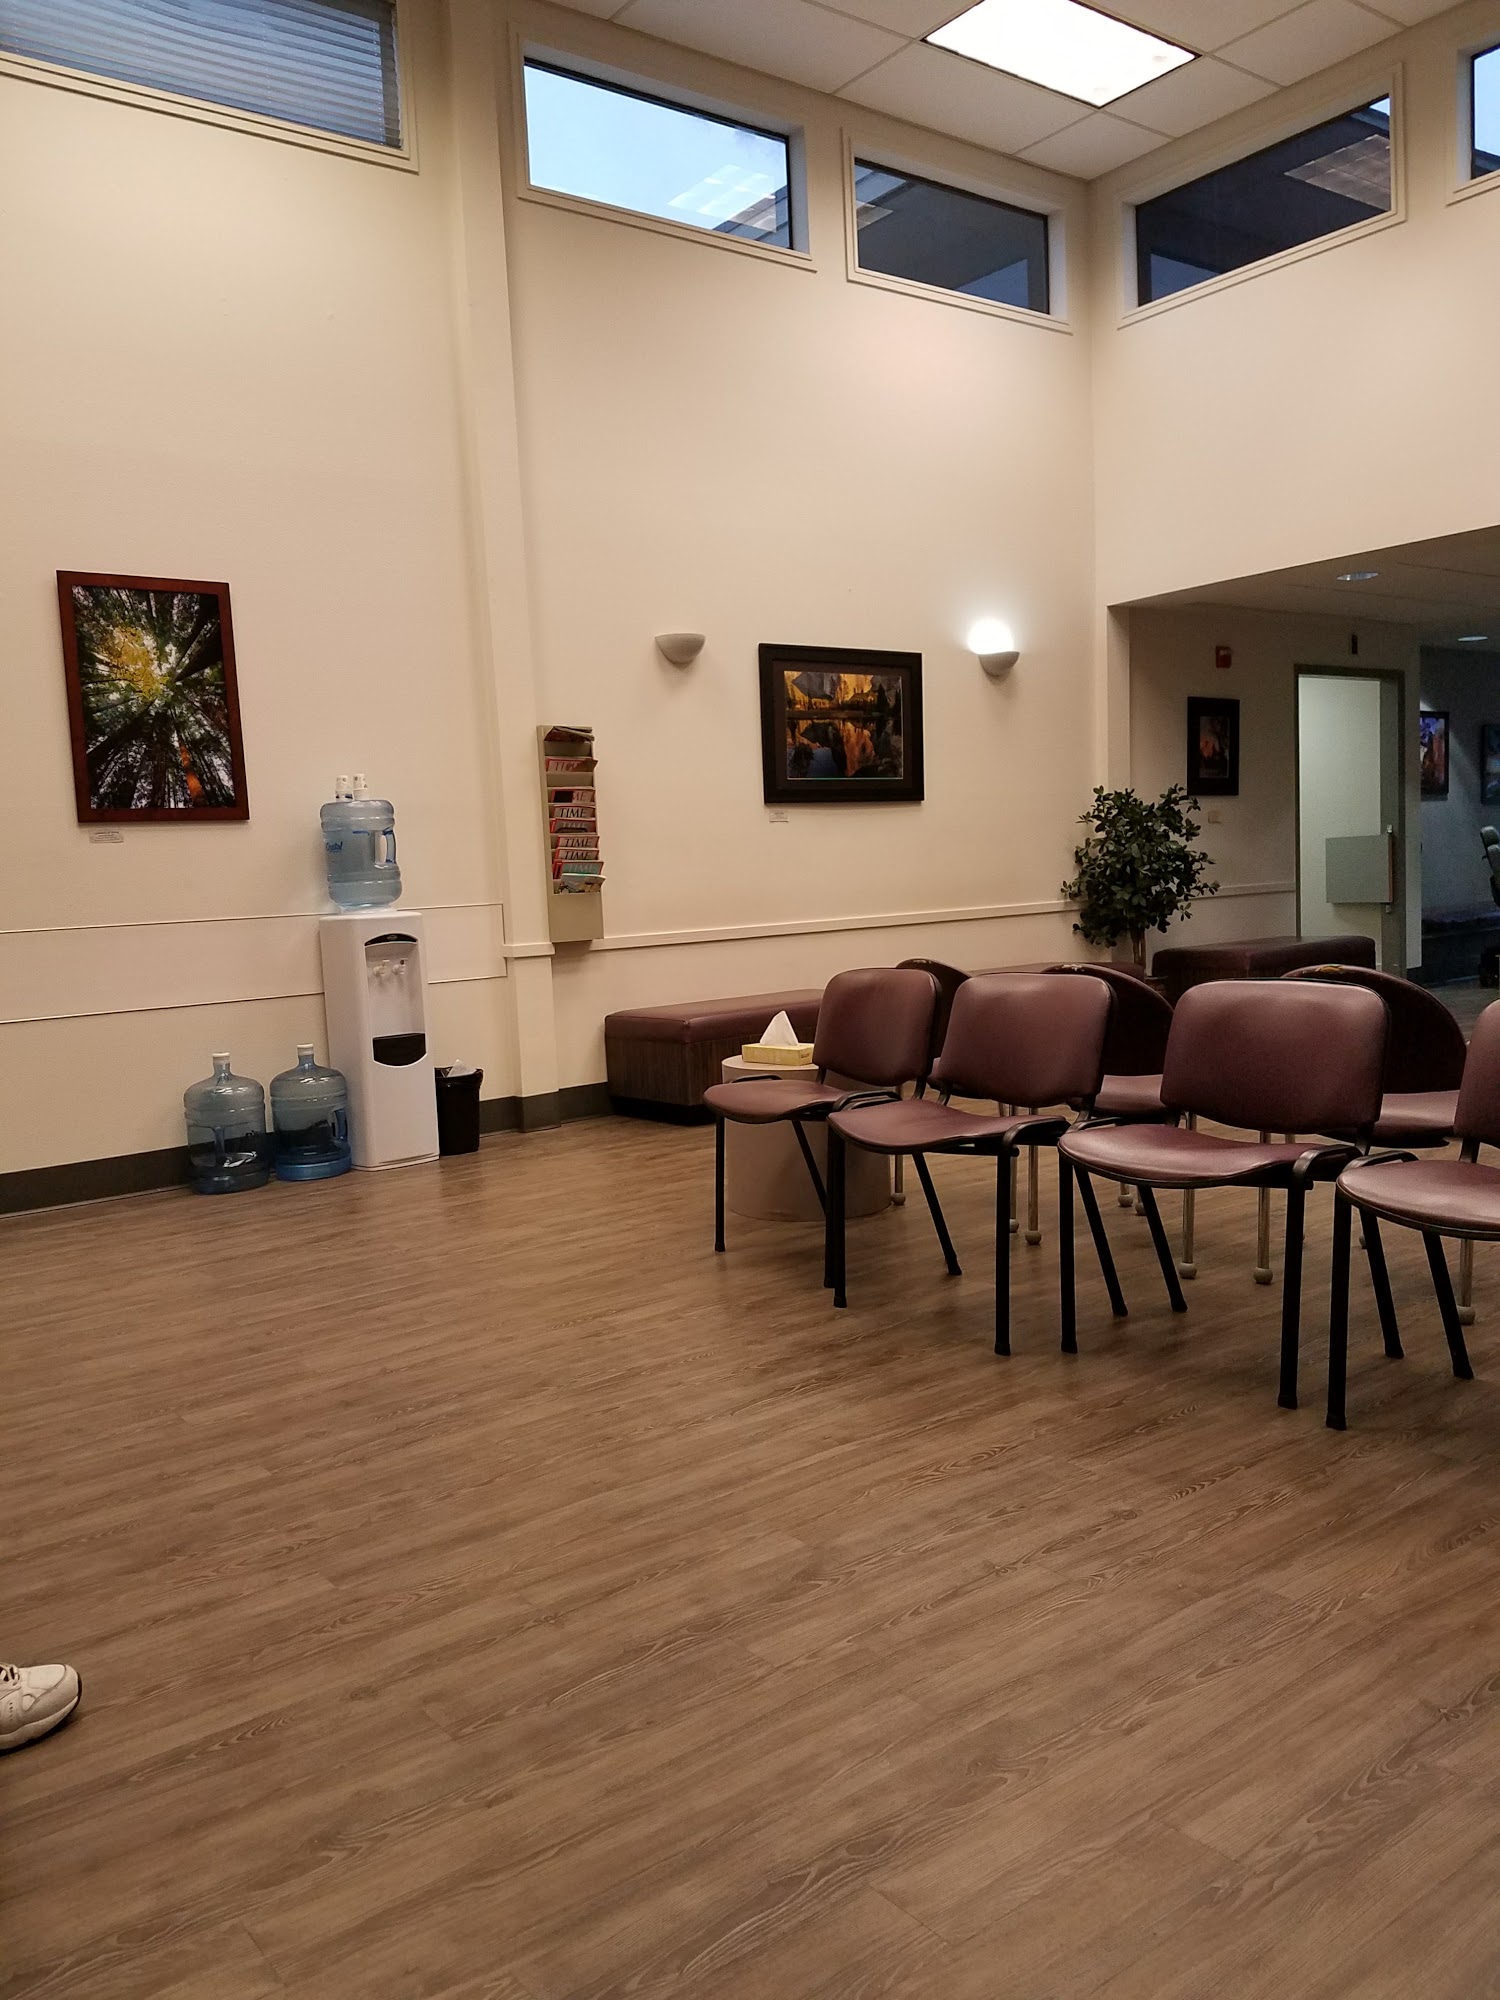 The Everett Clinic at Bellingham